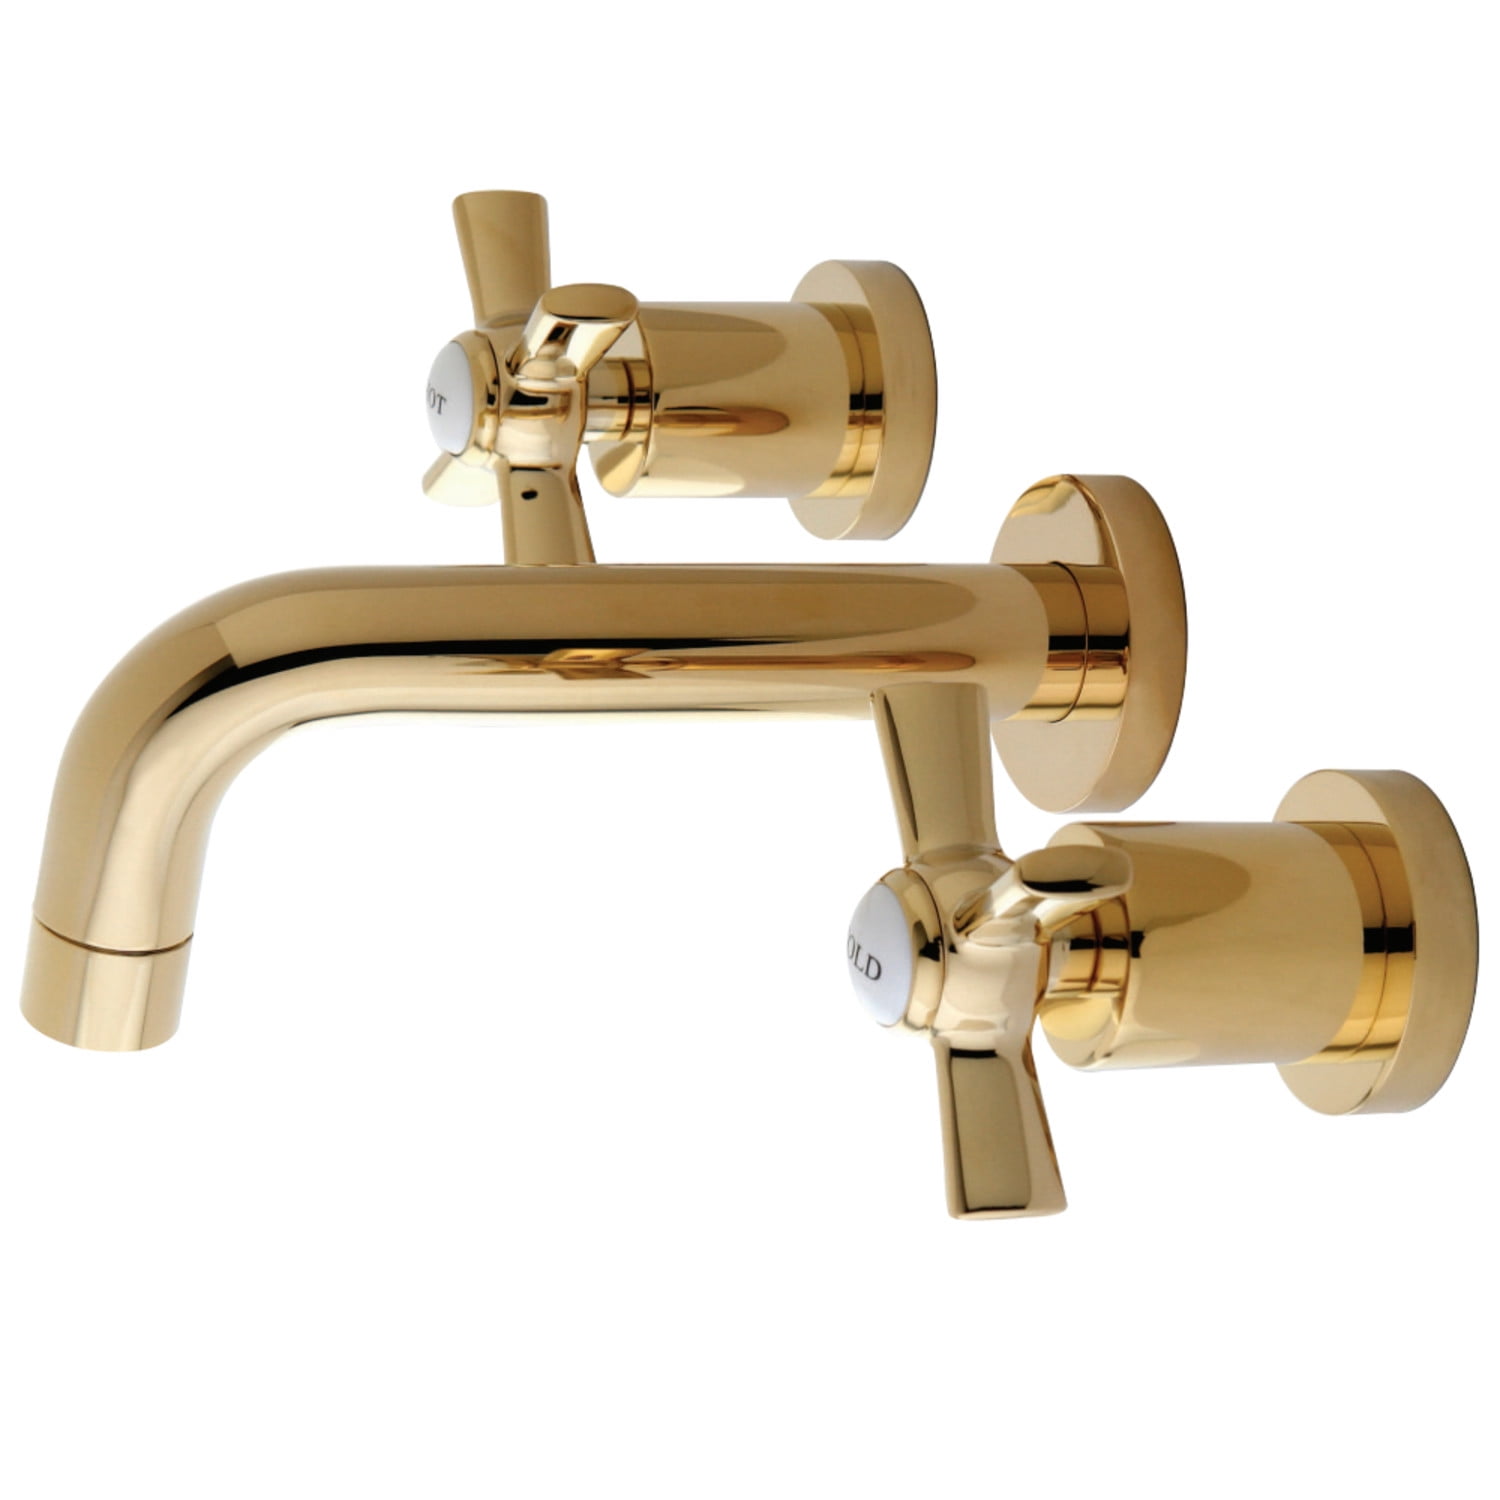 1/2" Polished Solid Brass Tap Faucet Mixer Basin Garden Bathroom Kitchen BIB 